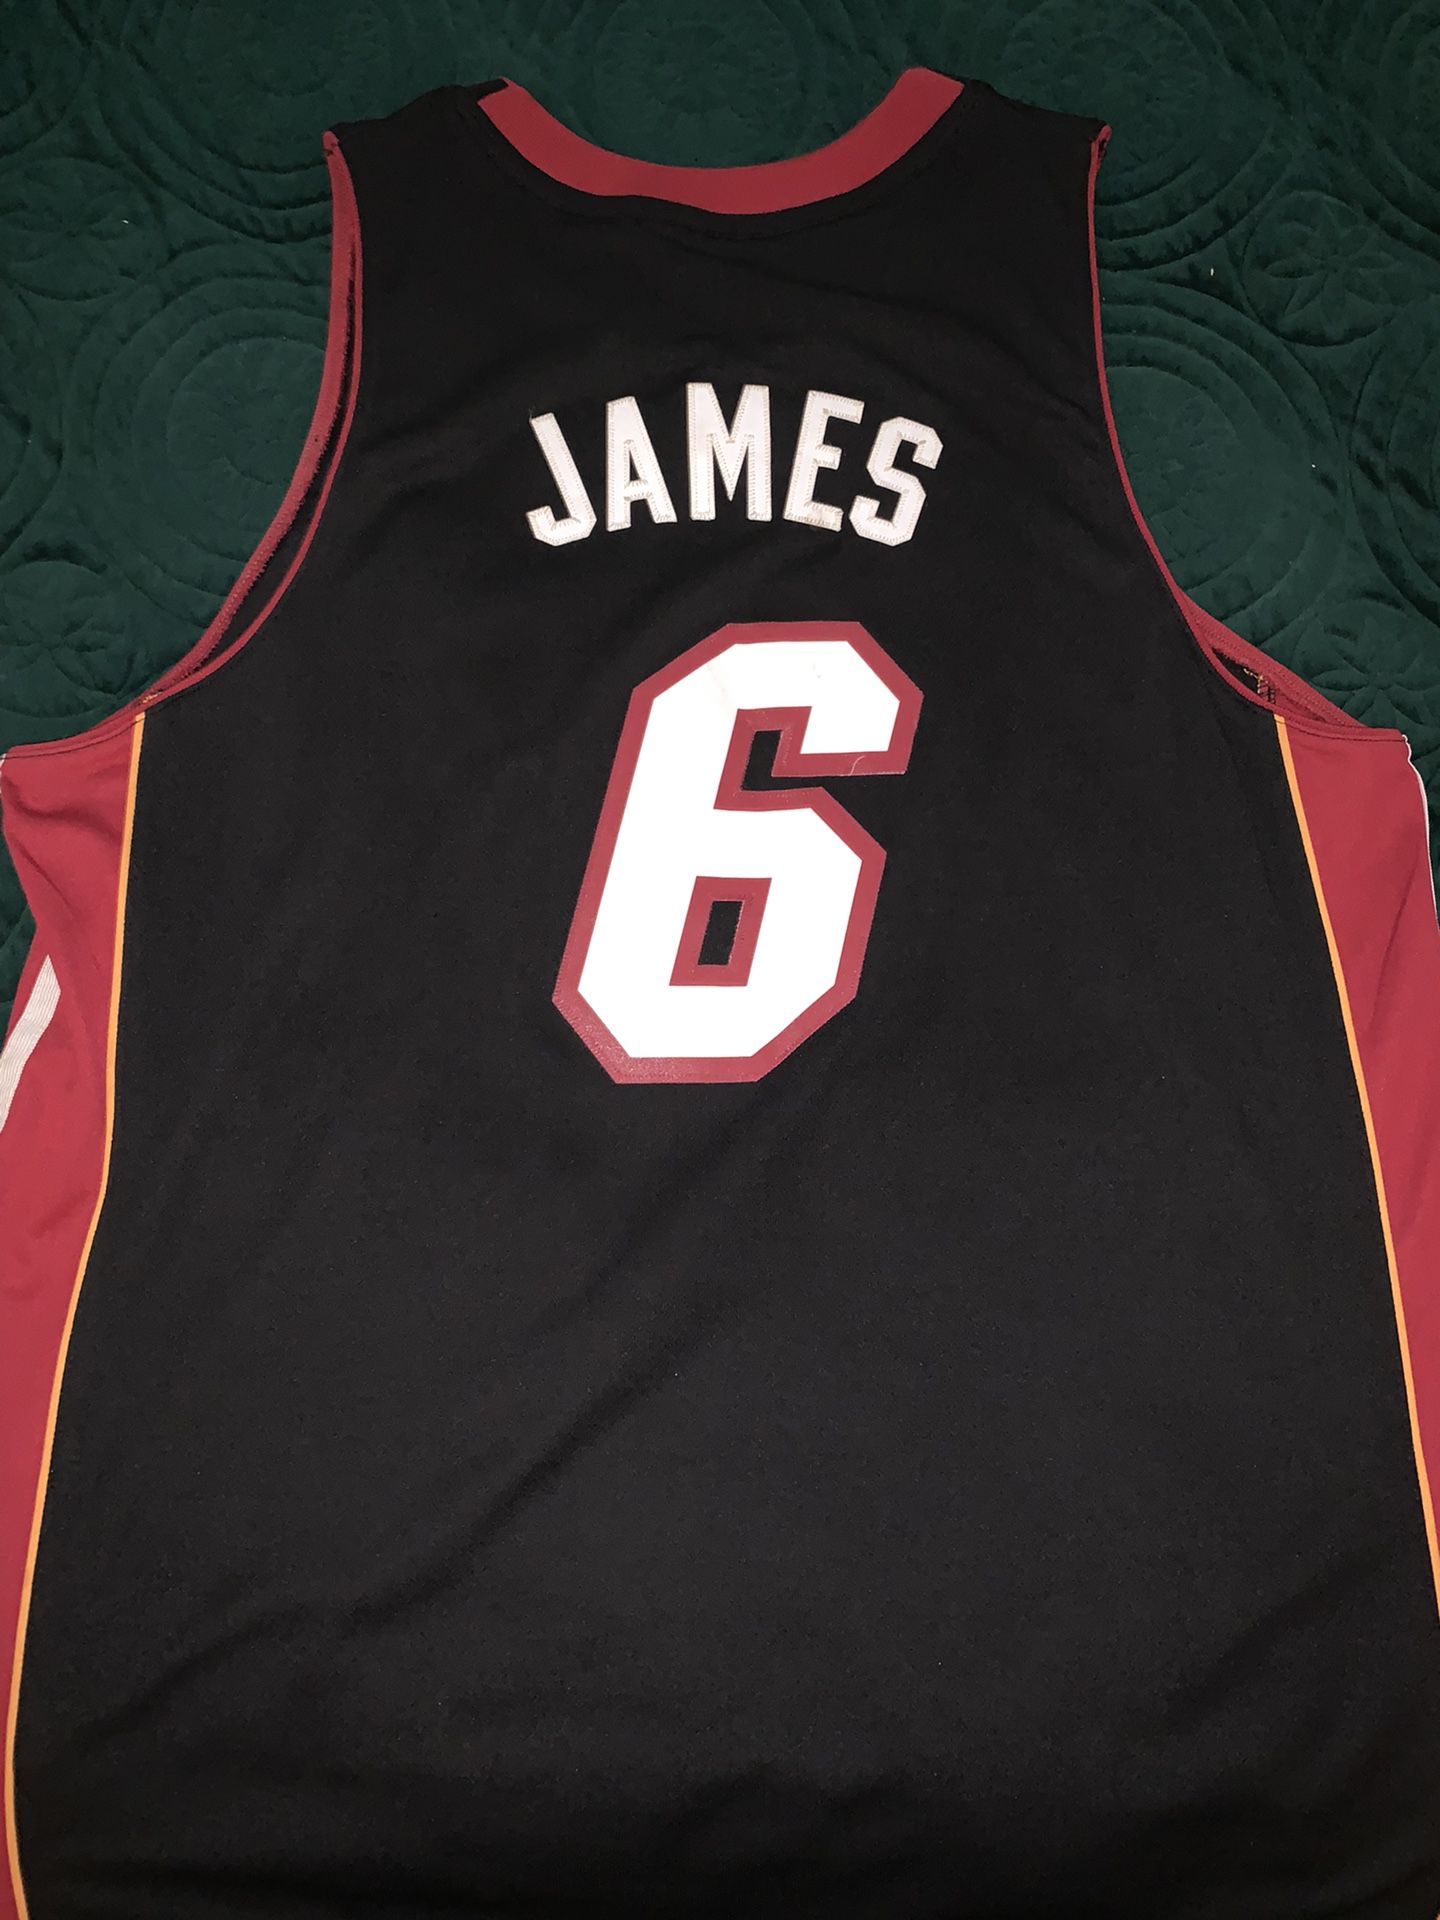 LeBron James Miami HEAT Jersey for Sale in Miami, FL - OfferUp